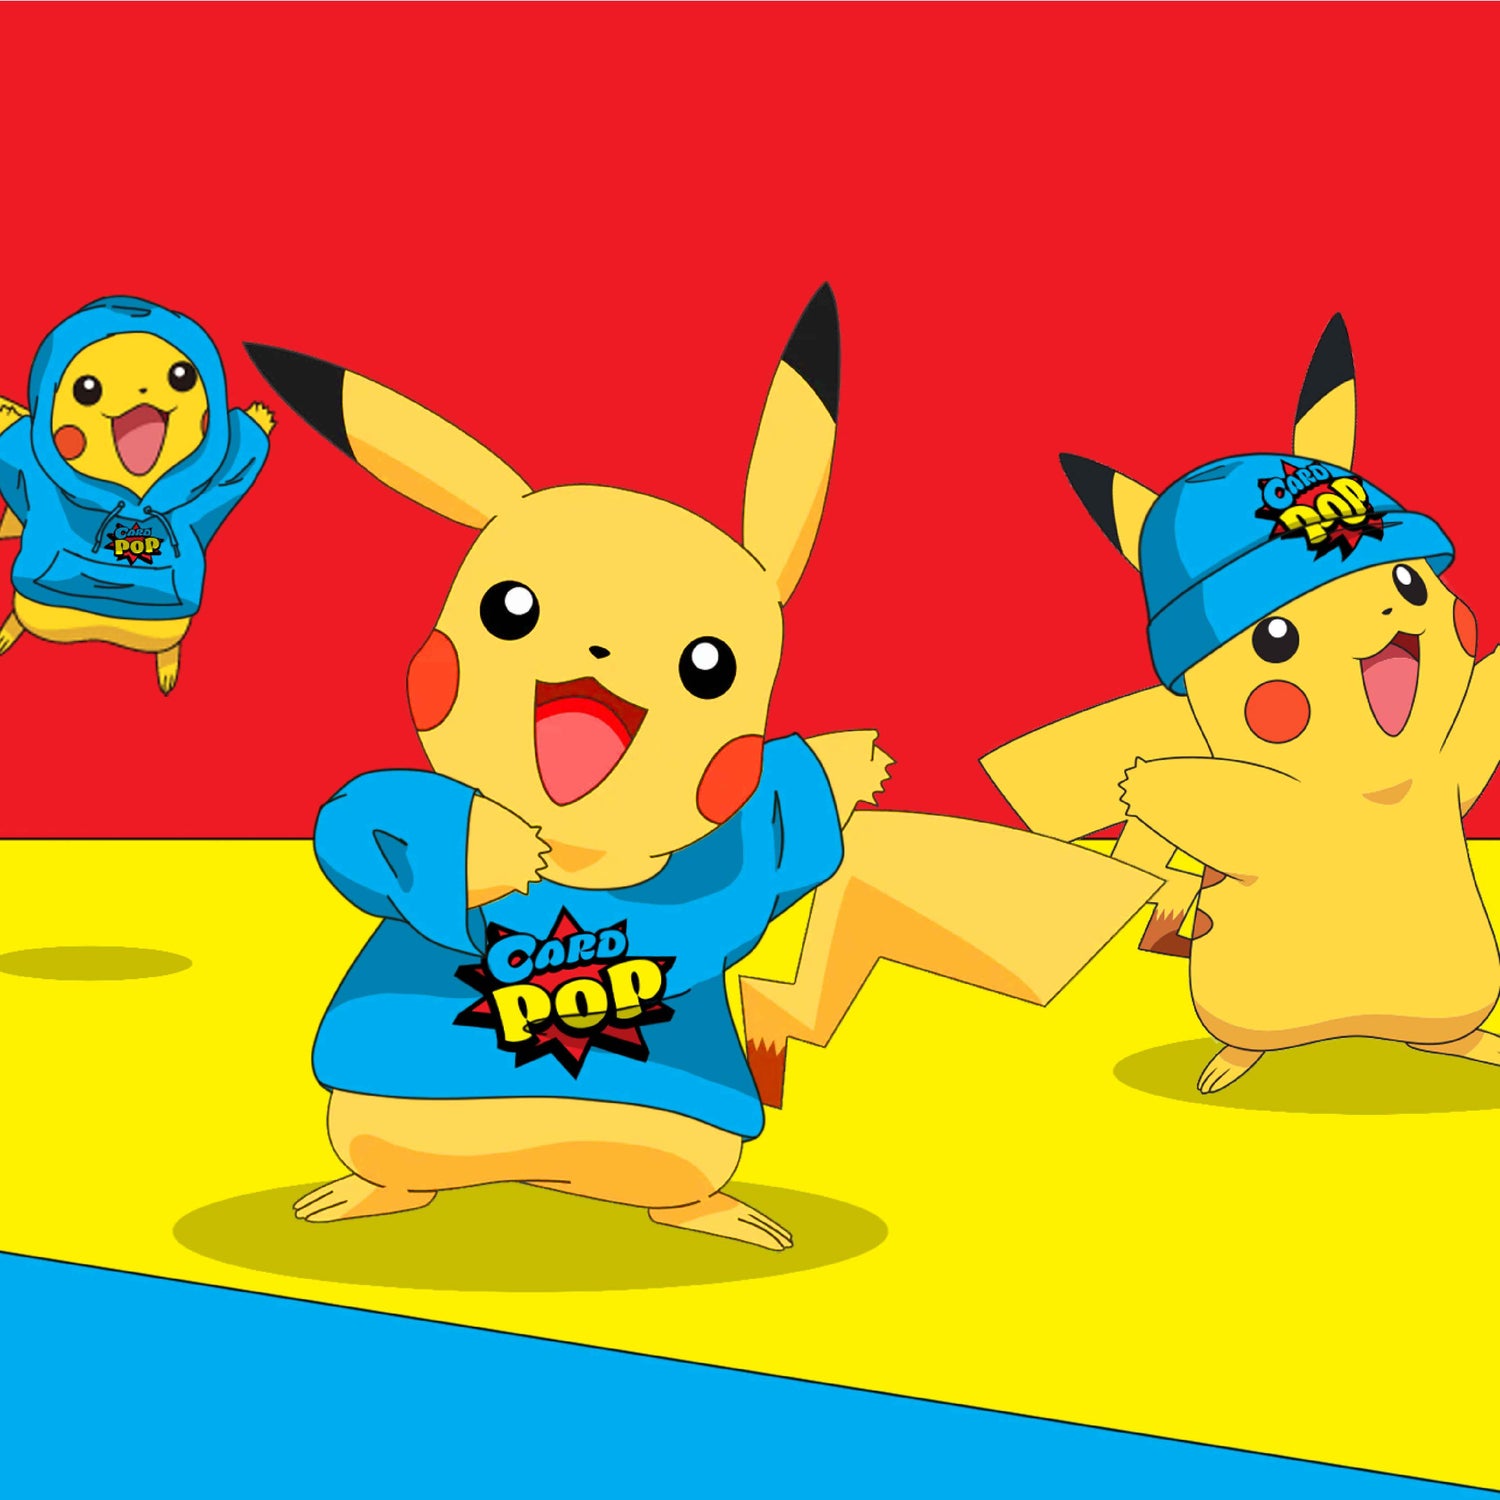 Cardpop Image of Pikachu the pokemon